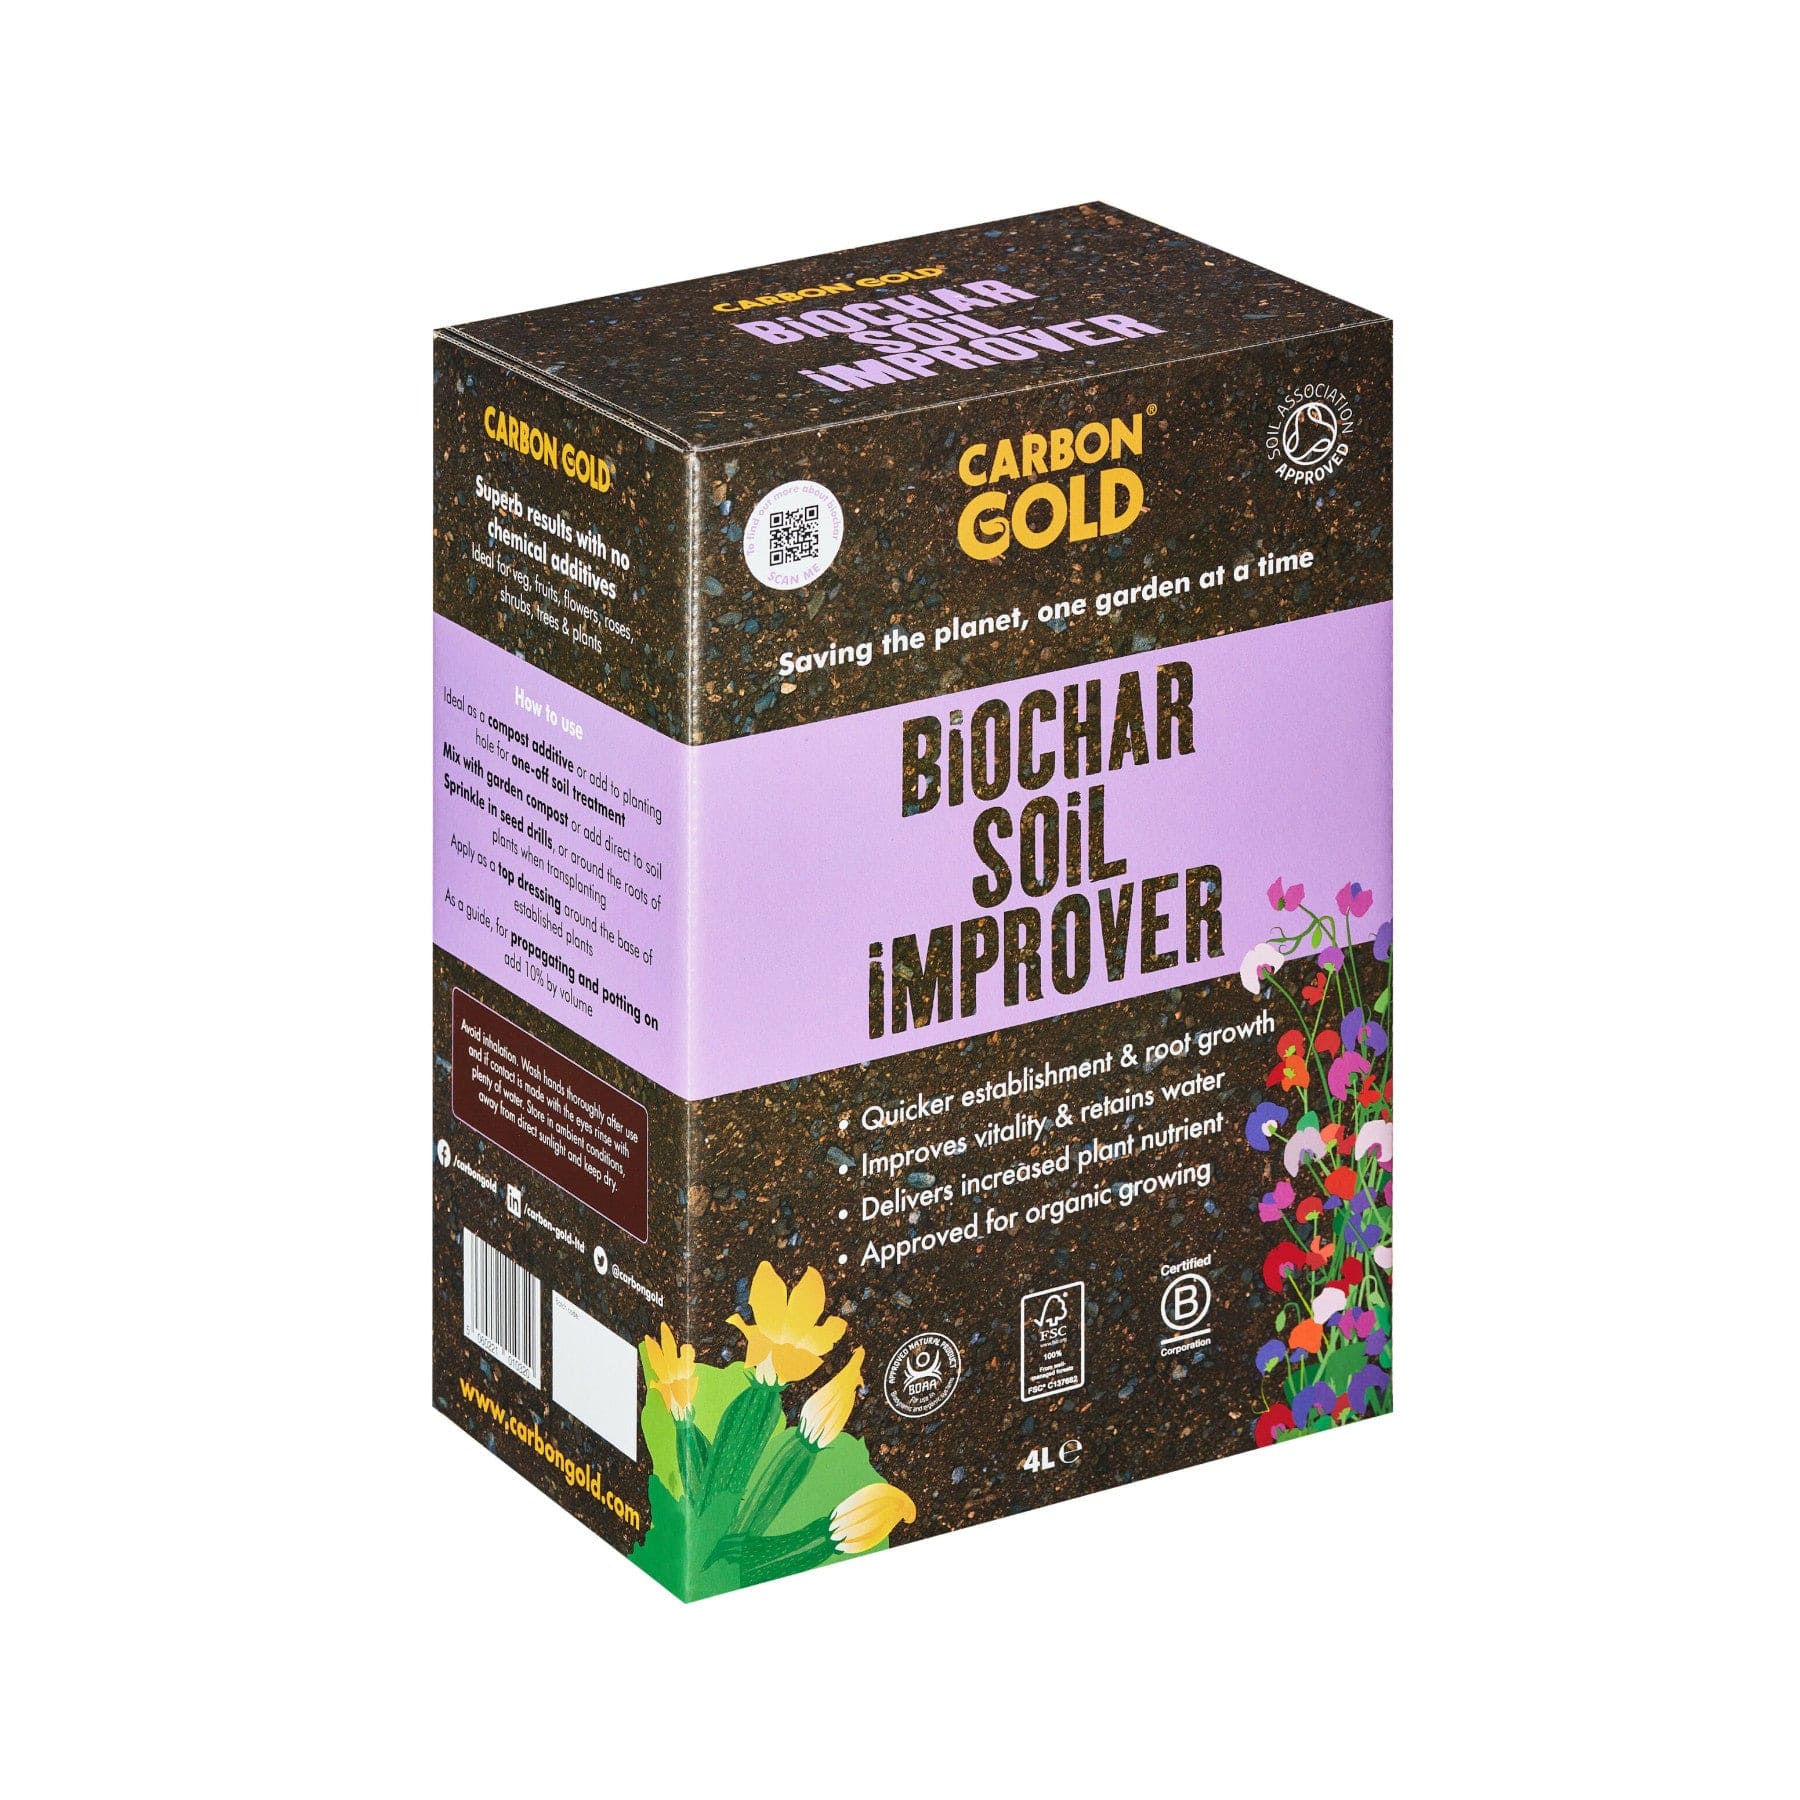 Biochar soil improver 4L